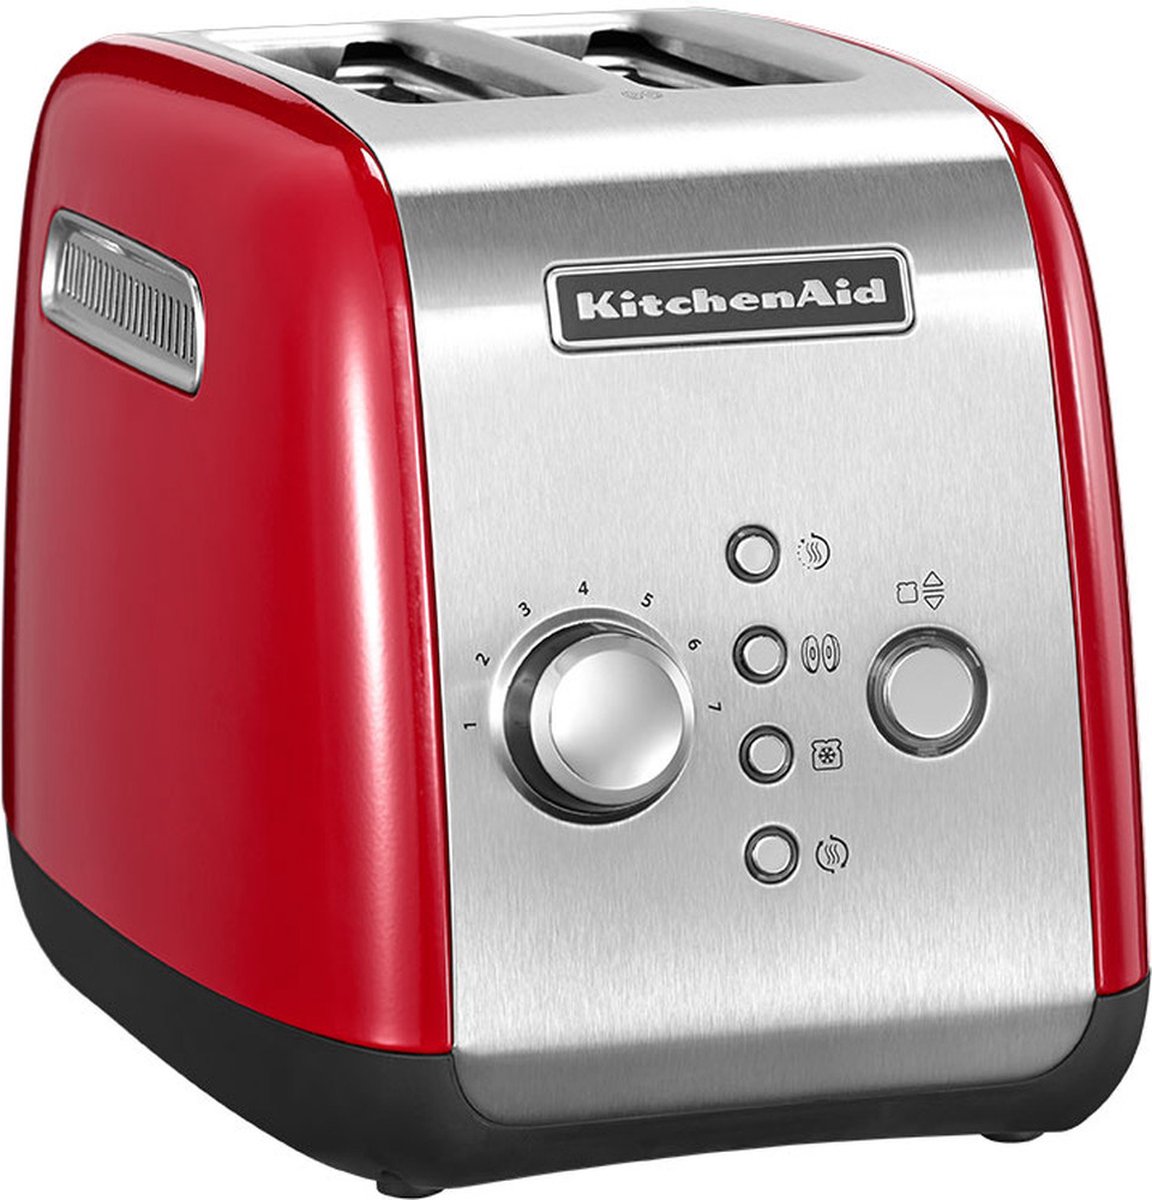 KitchenAid Broodrooster - Tosti apparaat met 2 Sleuven, warmhoudfunctie en  ontdooi... | bol